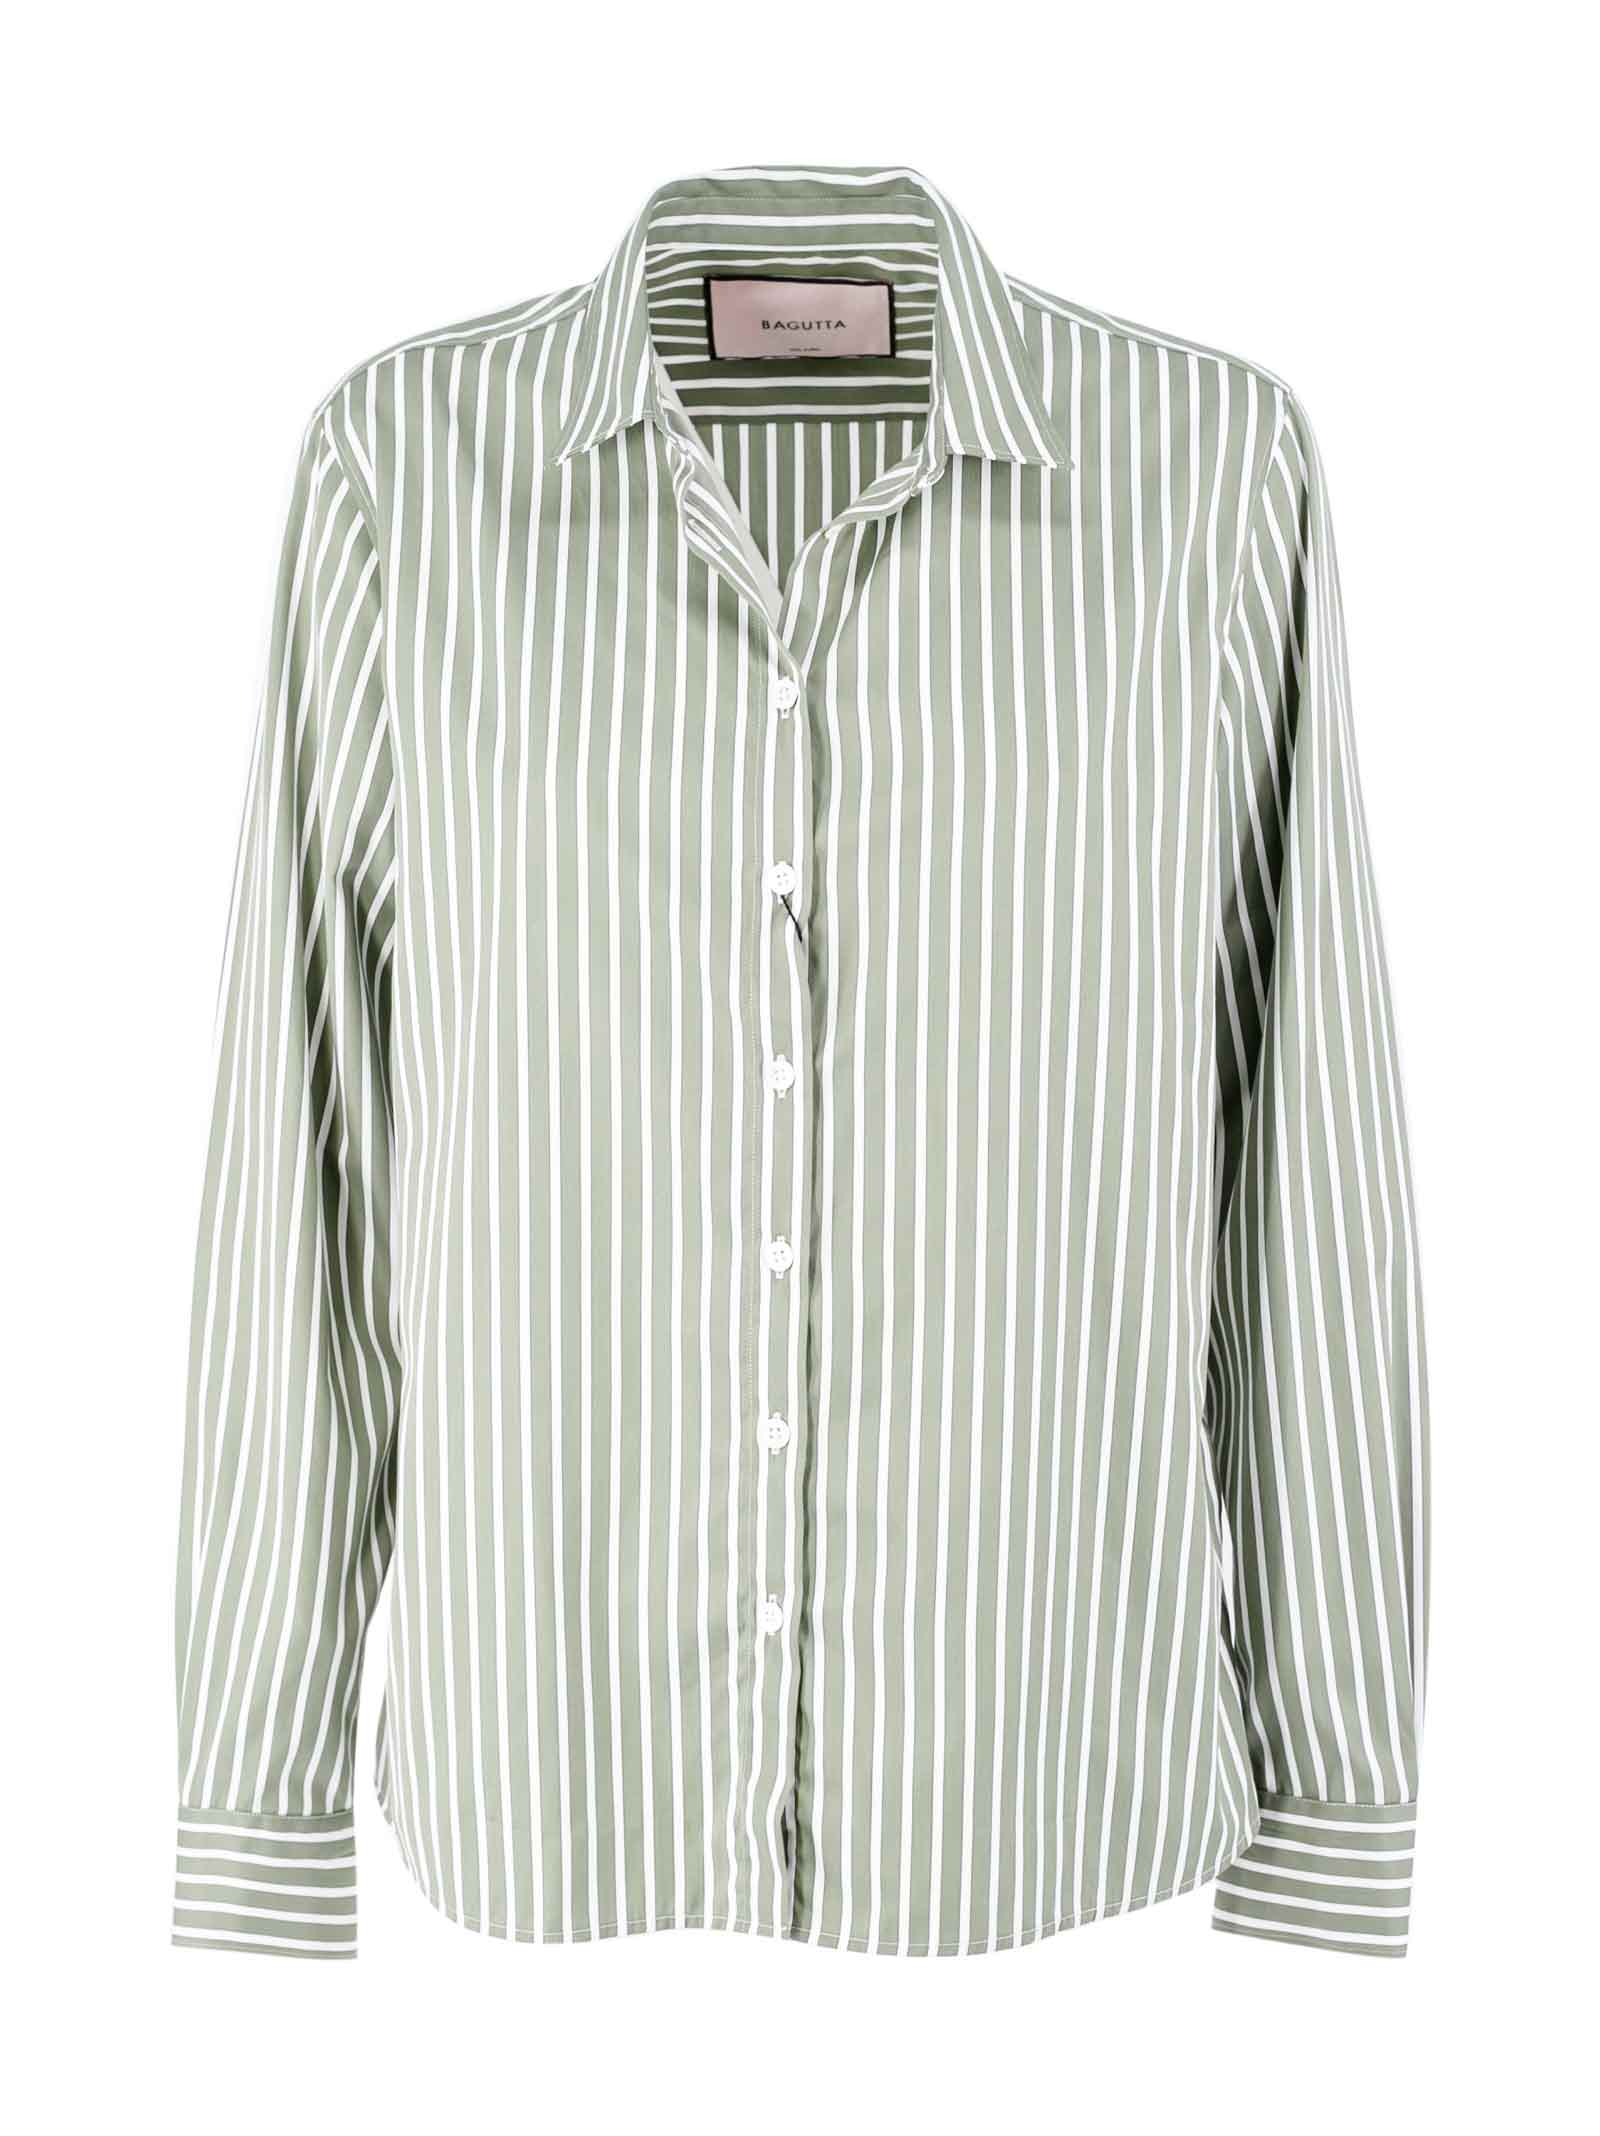 Bagutta Cotton Striped Shirt